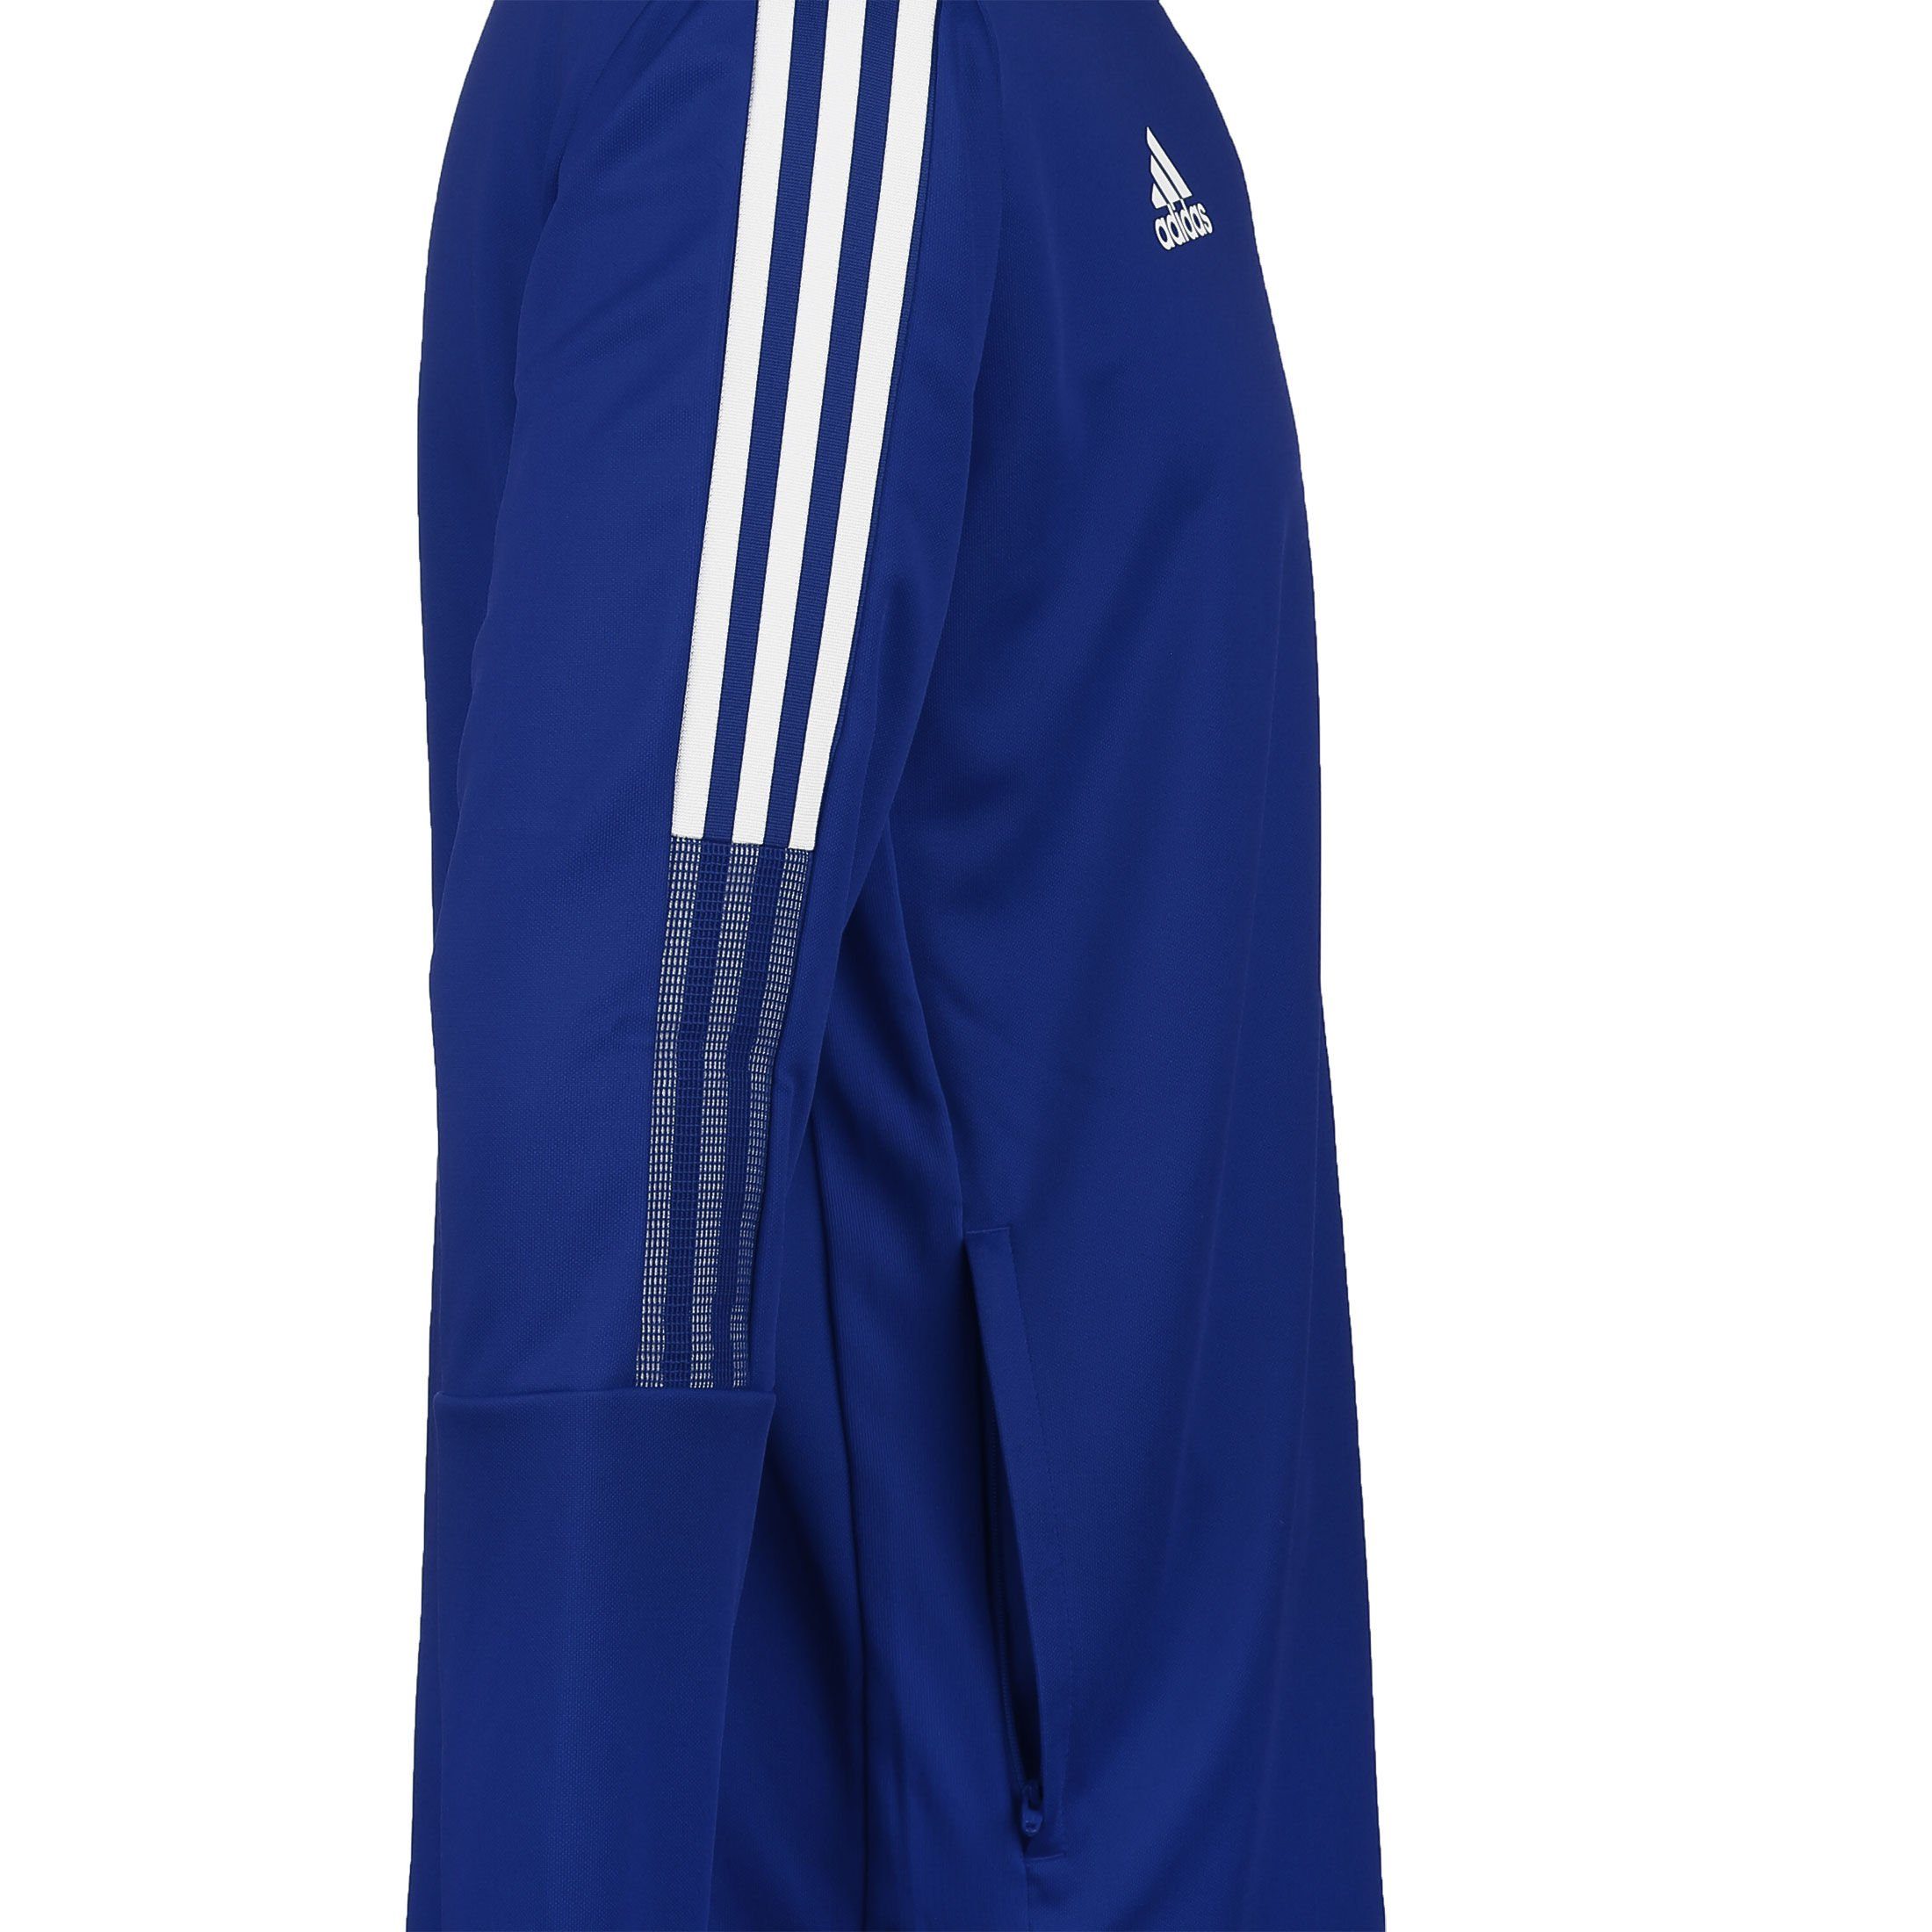 Sweatjacke Tiro Trainingsjacke Performance blau Herren adidas 21 / weiß